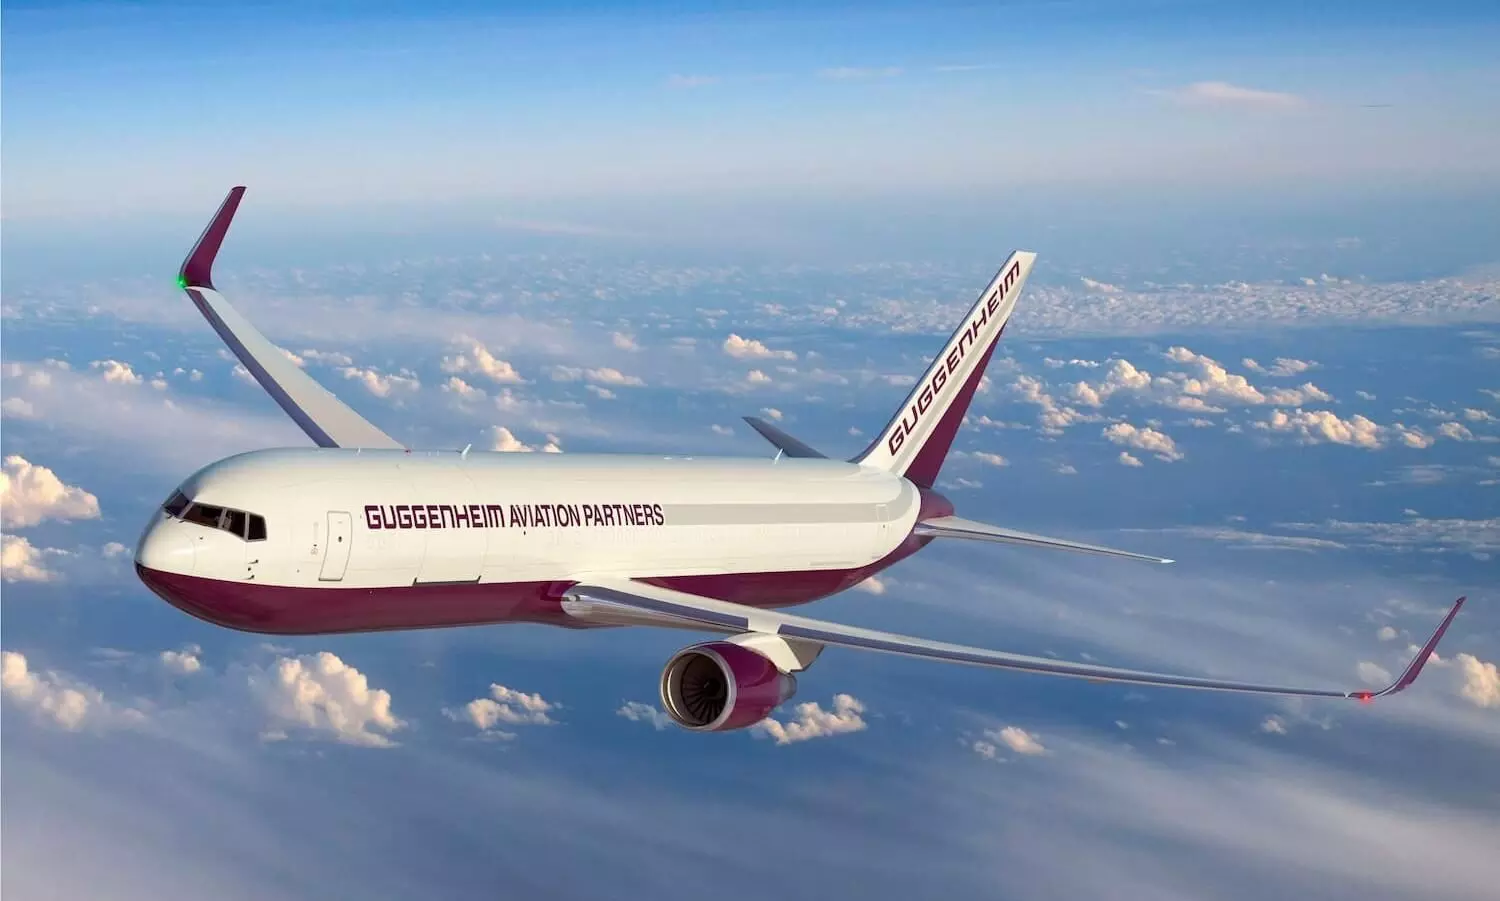 Boeing Q1 revenue up 28% on higher deliveries